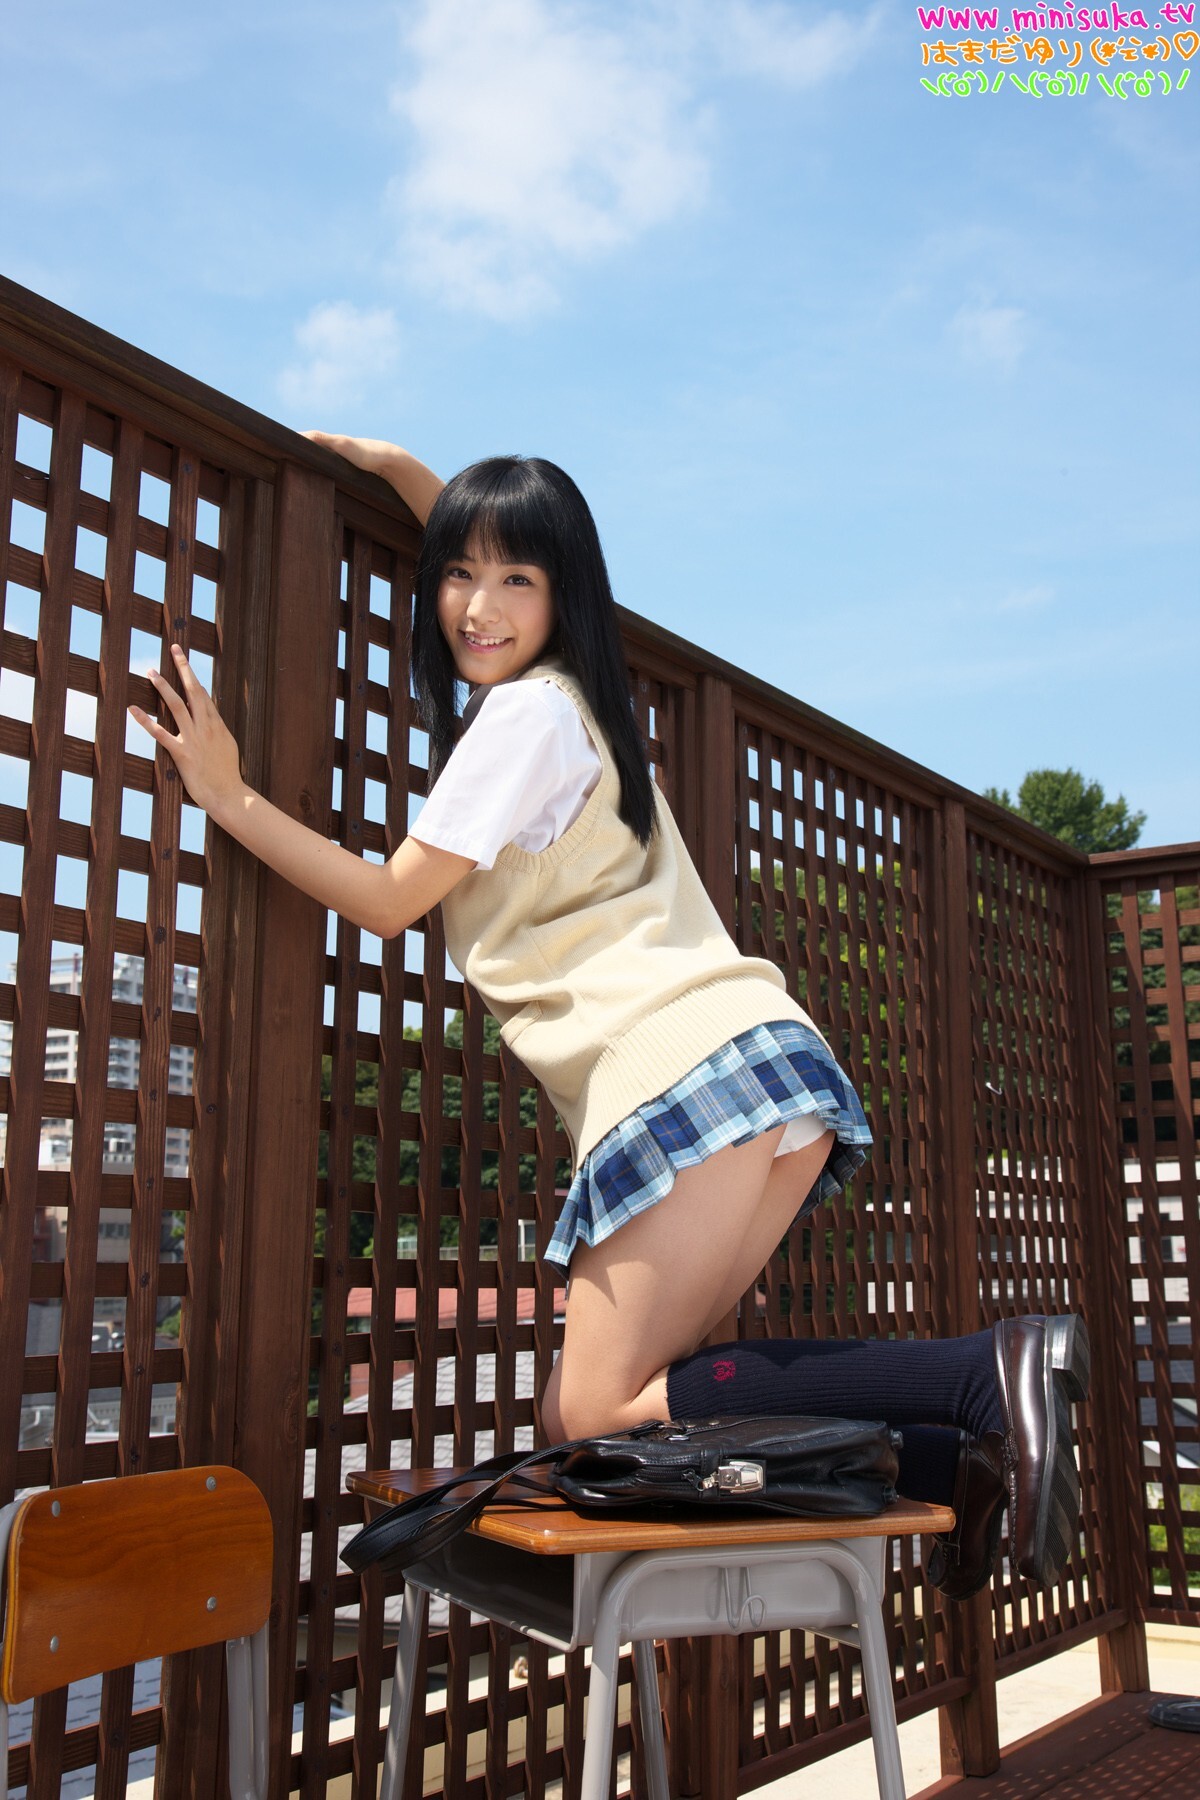 Yuri Hamada Vol.3[ Minisuka.tv ]Women in active service give birth to beautiful Japanese girls